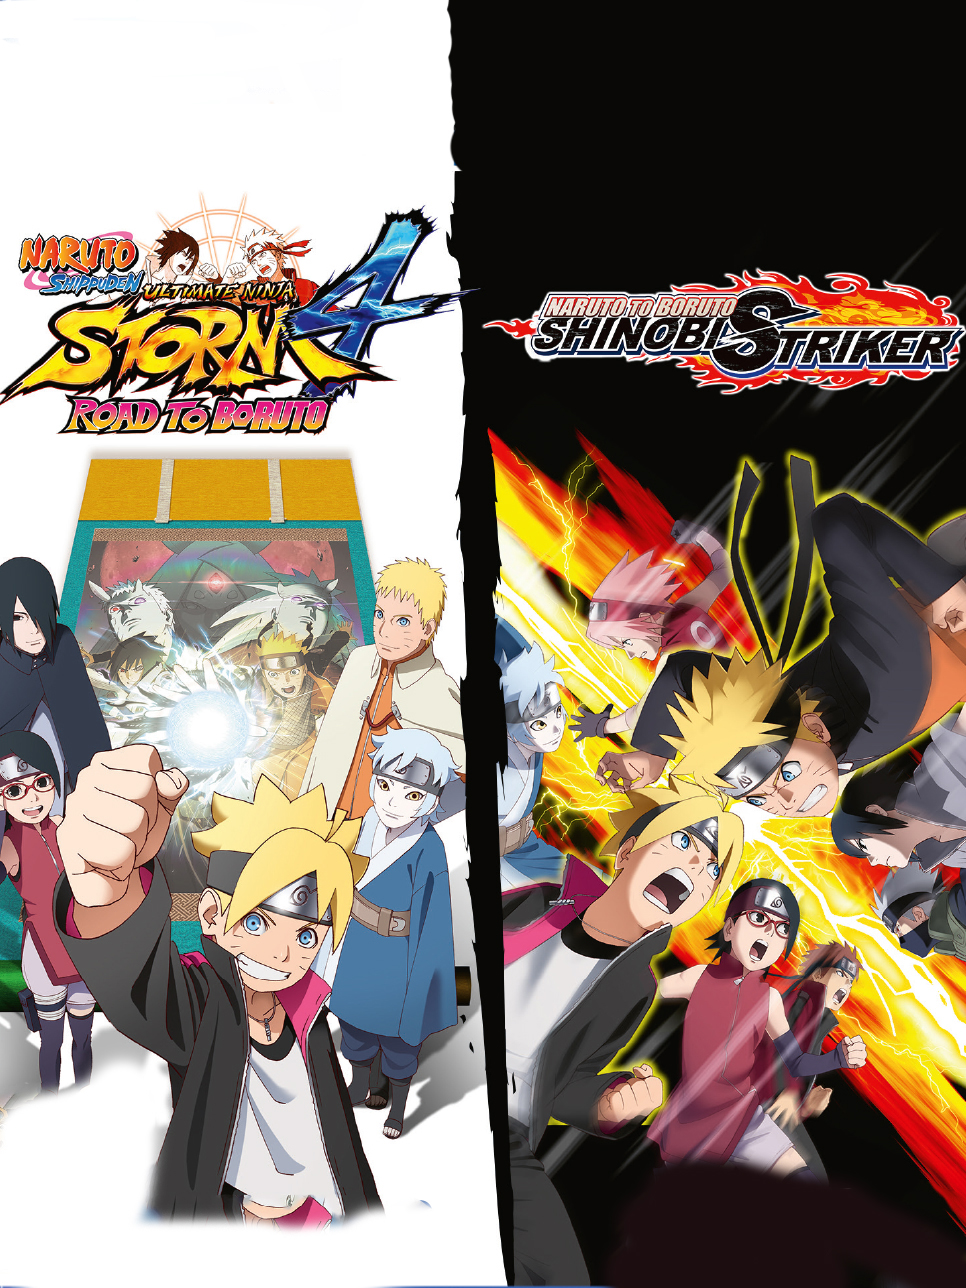 Naruto Shippuden : Ultimate Ninja Storm 4 Road to Boruto